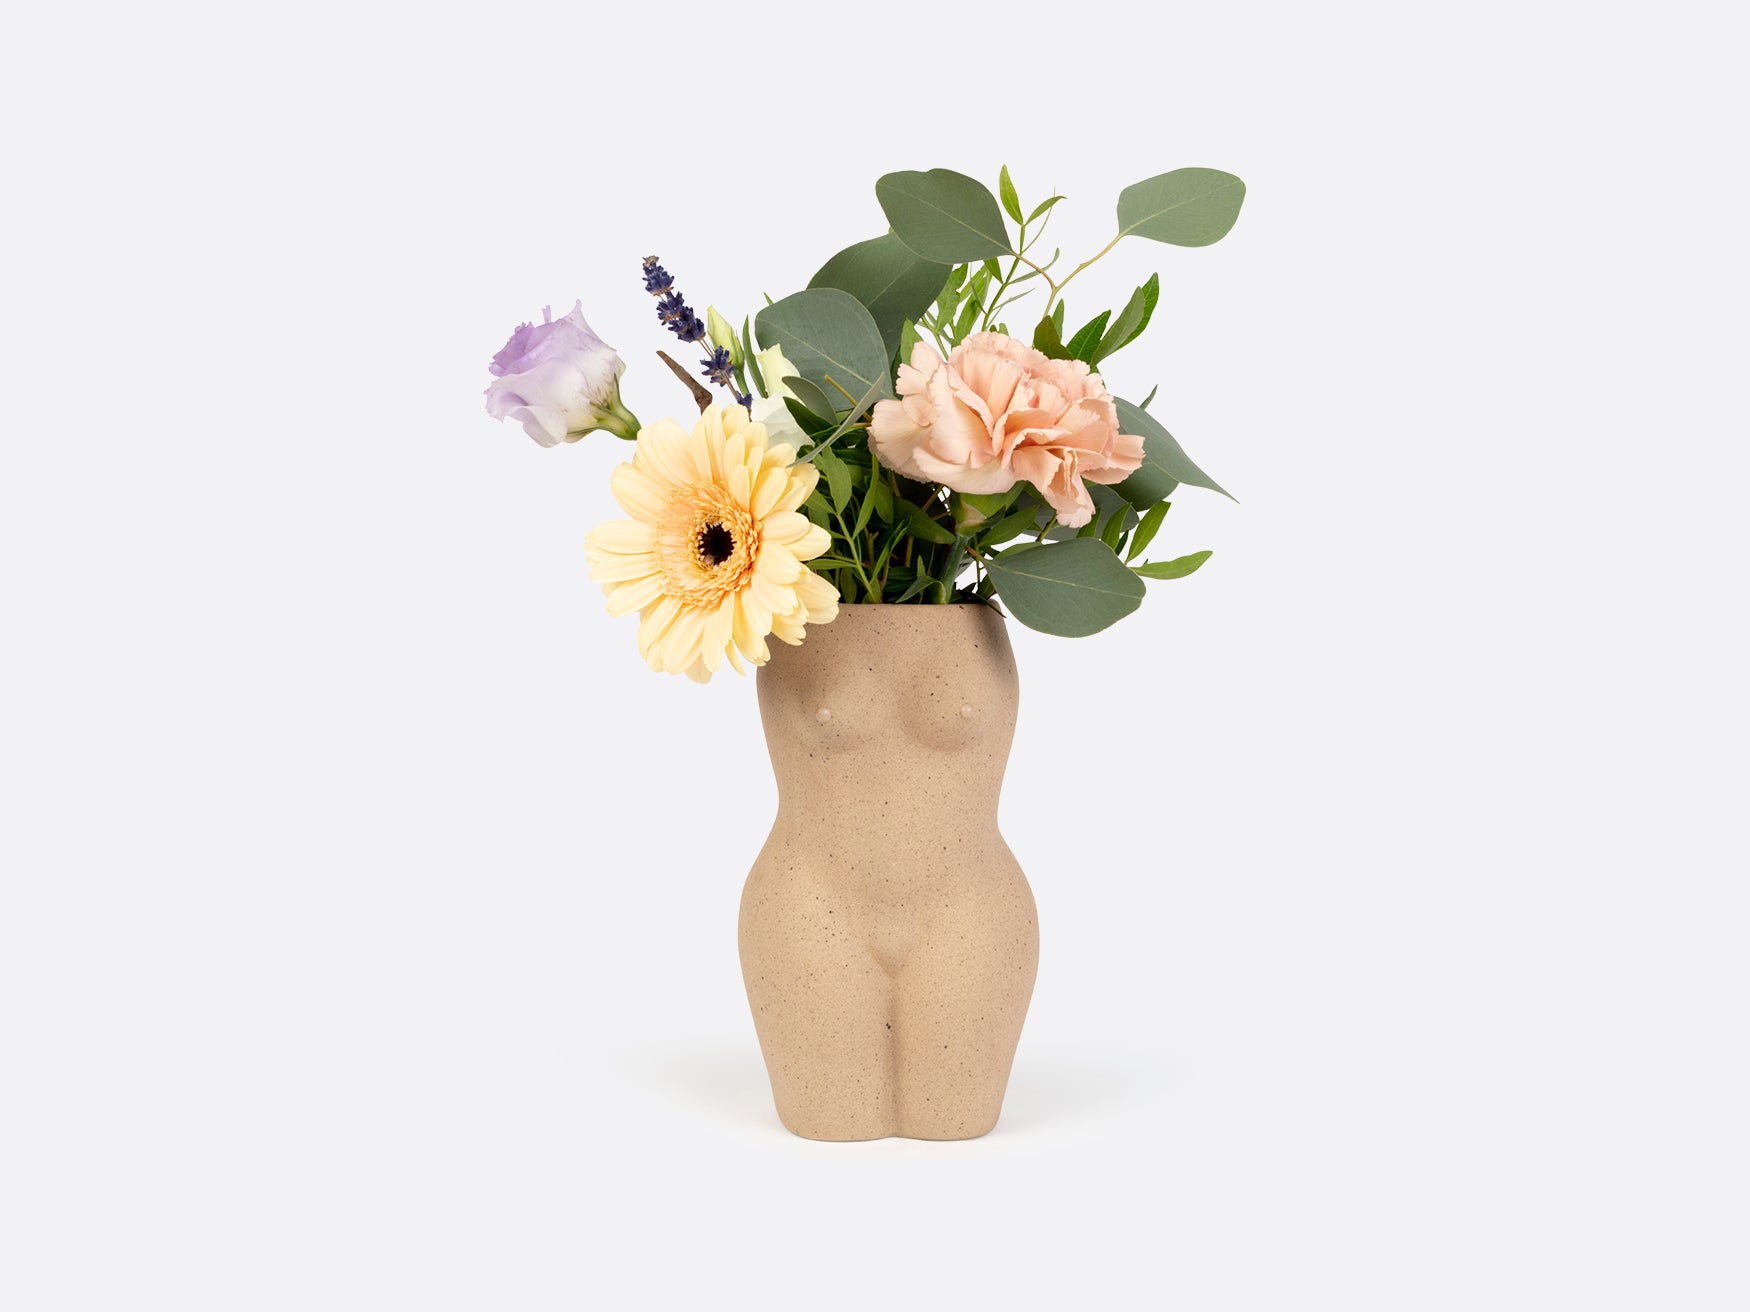 Body Vase SMALL